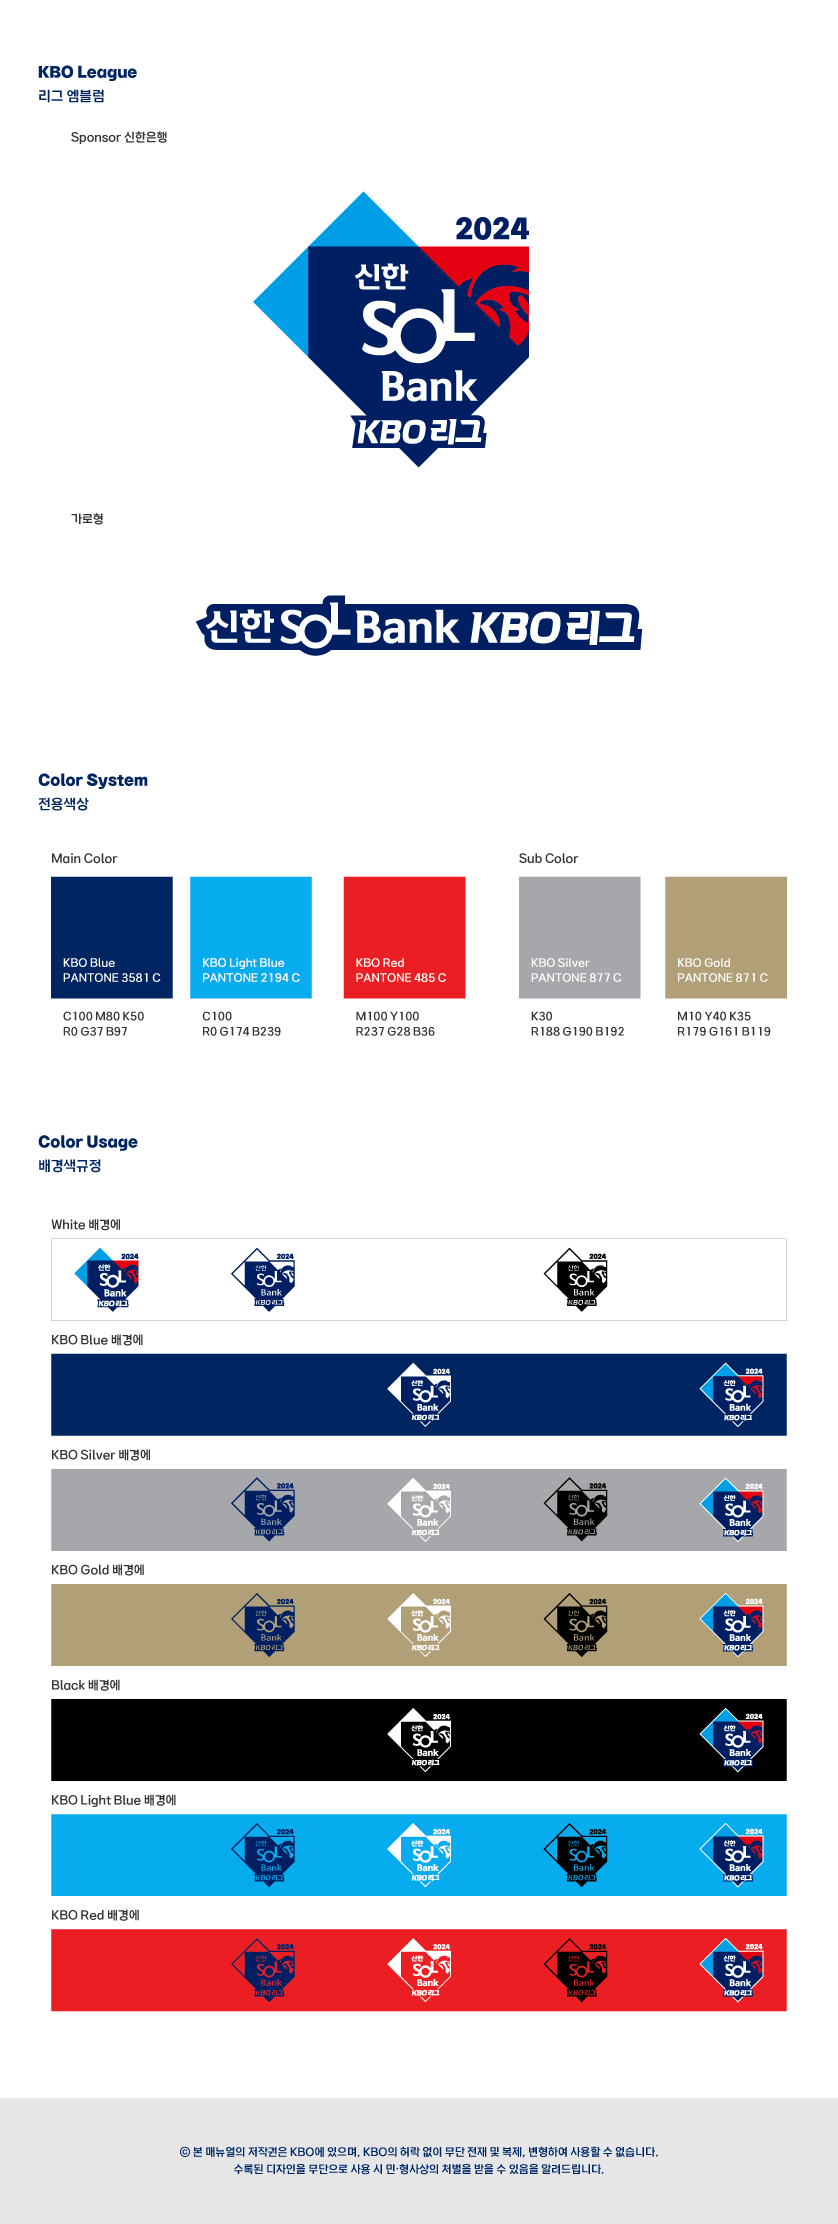 KBO League 리그 엠블럼, Color System, Color Usage